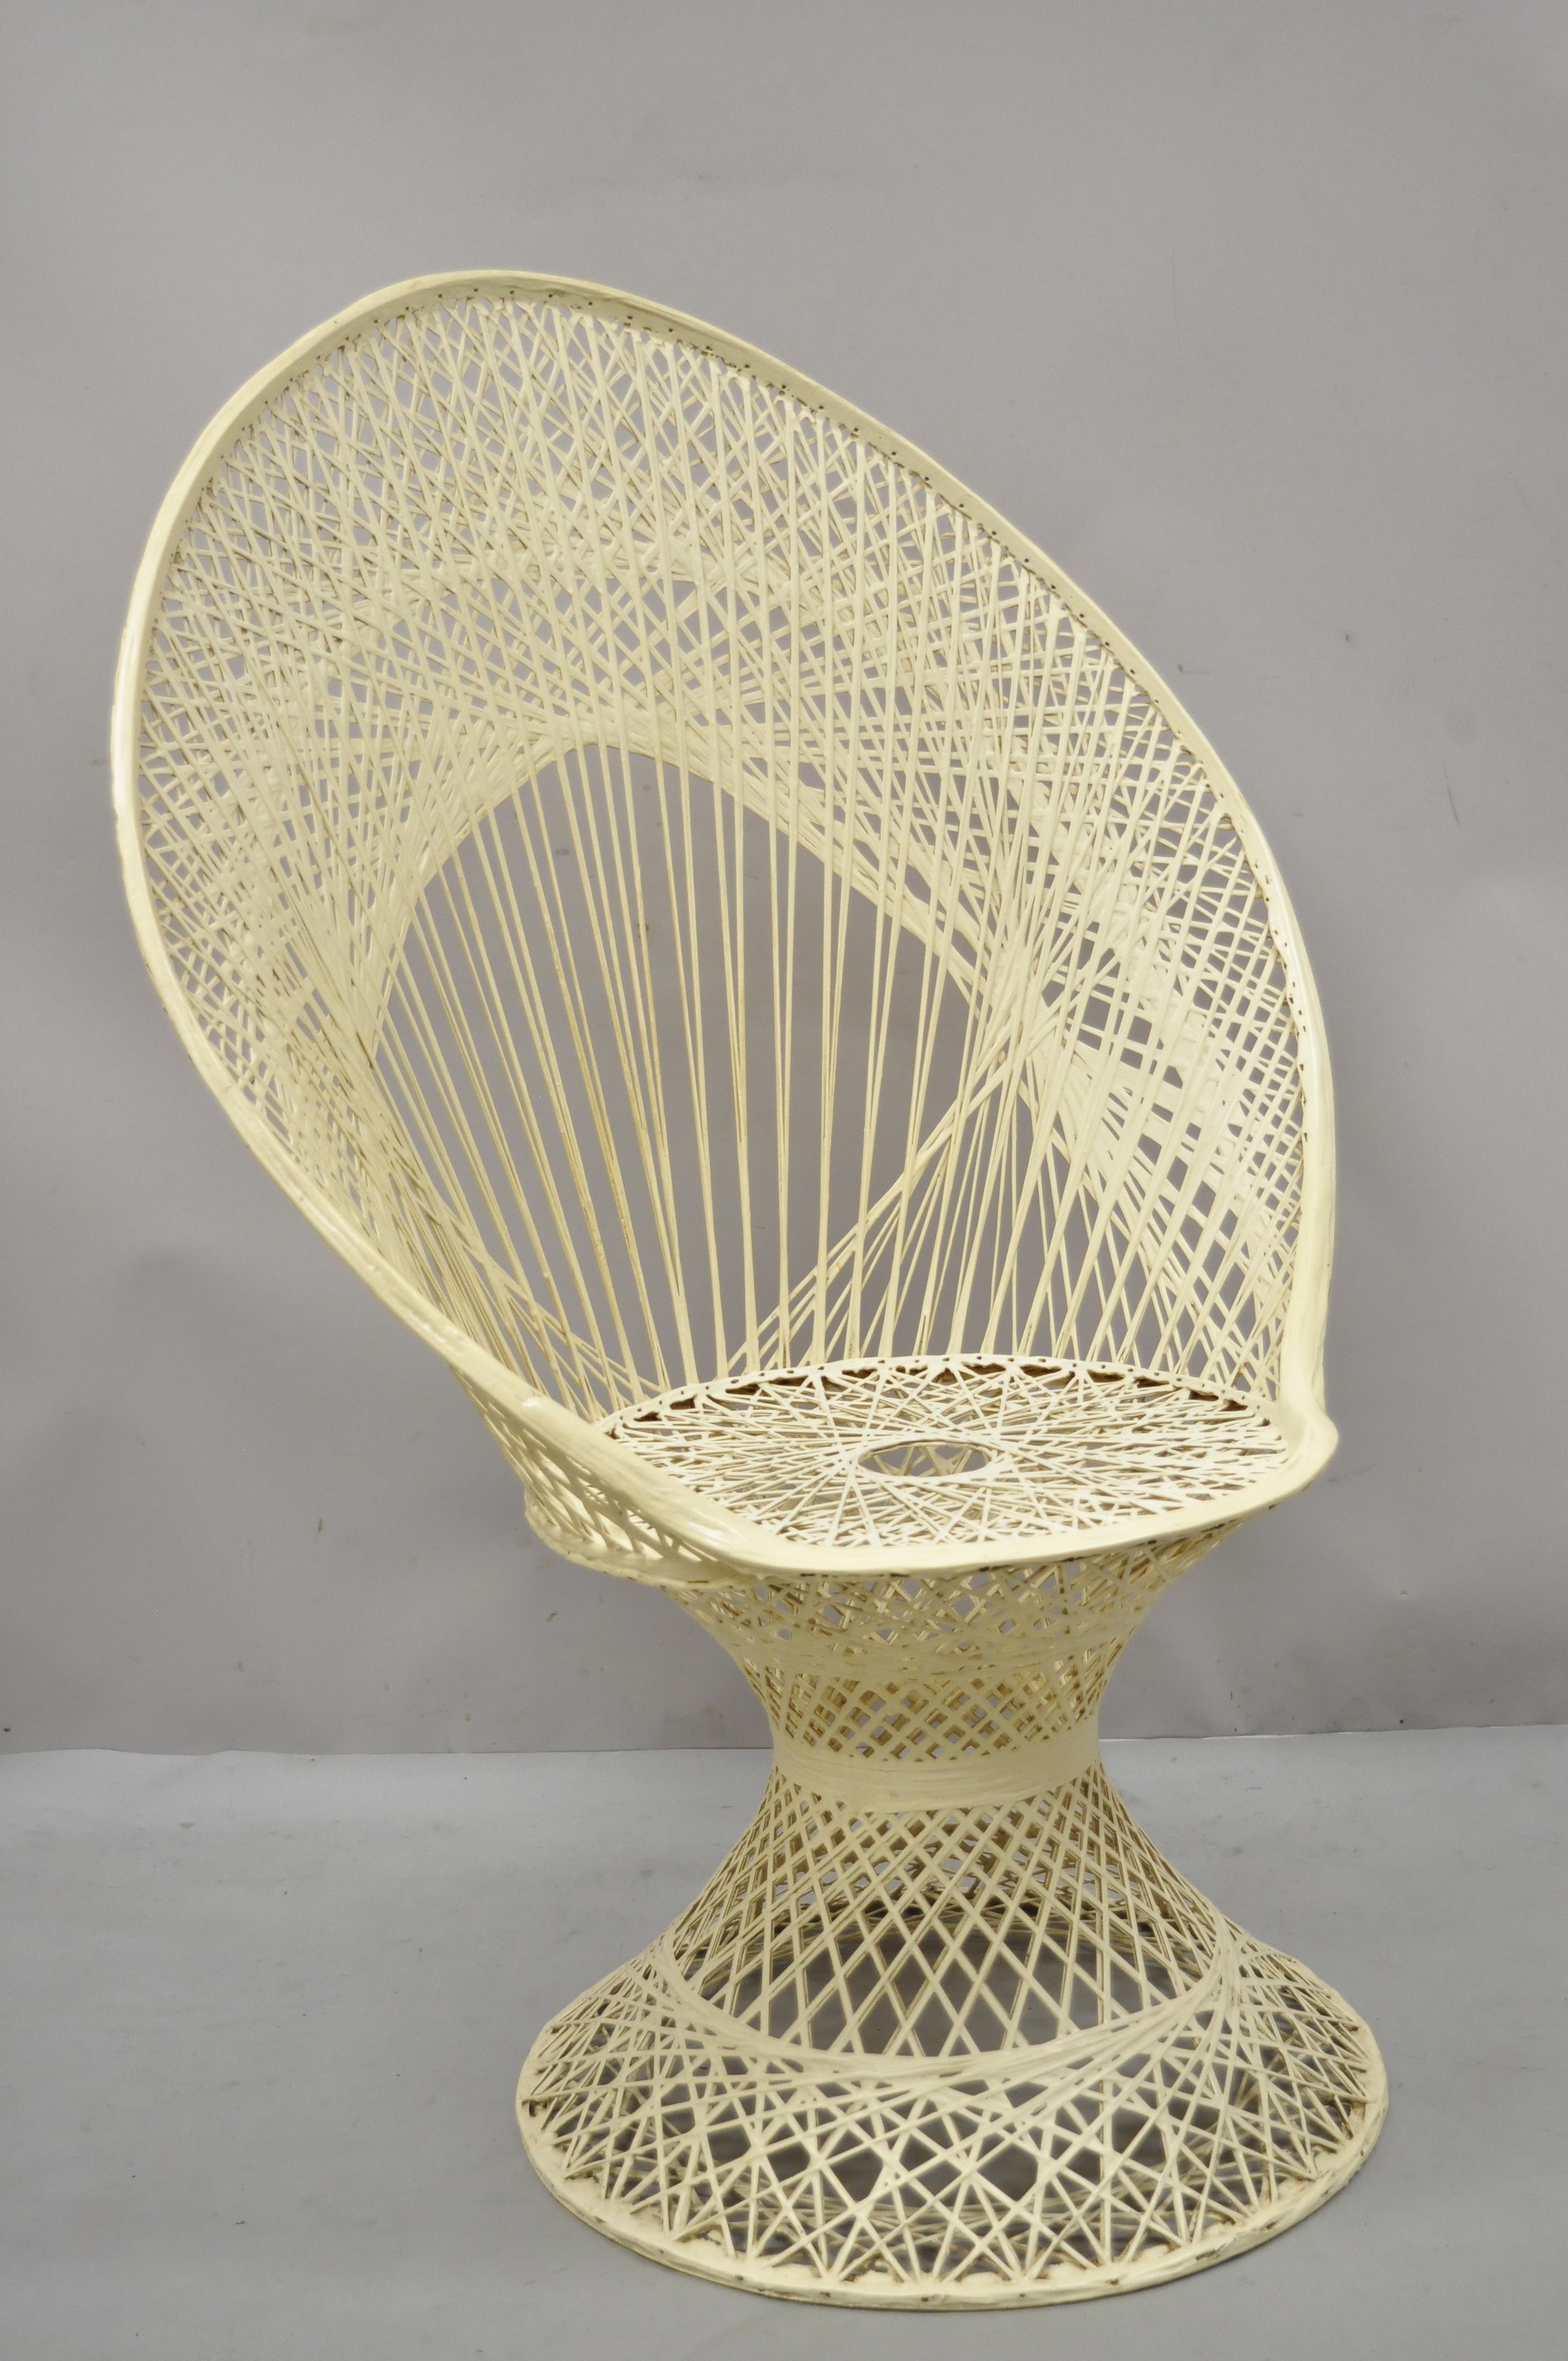 Russell Woodard woven spun fiberglass tall fan back peacock diamond chair. Item features spun woven fiberglass construction, clean modernist lines, quality American craftsmanship, great style and form. Measurements: 48